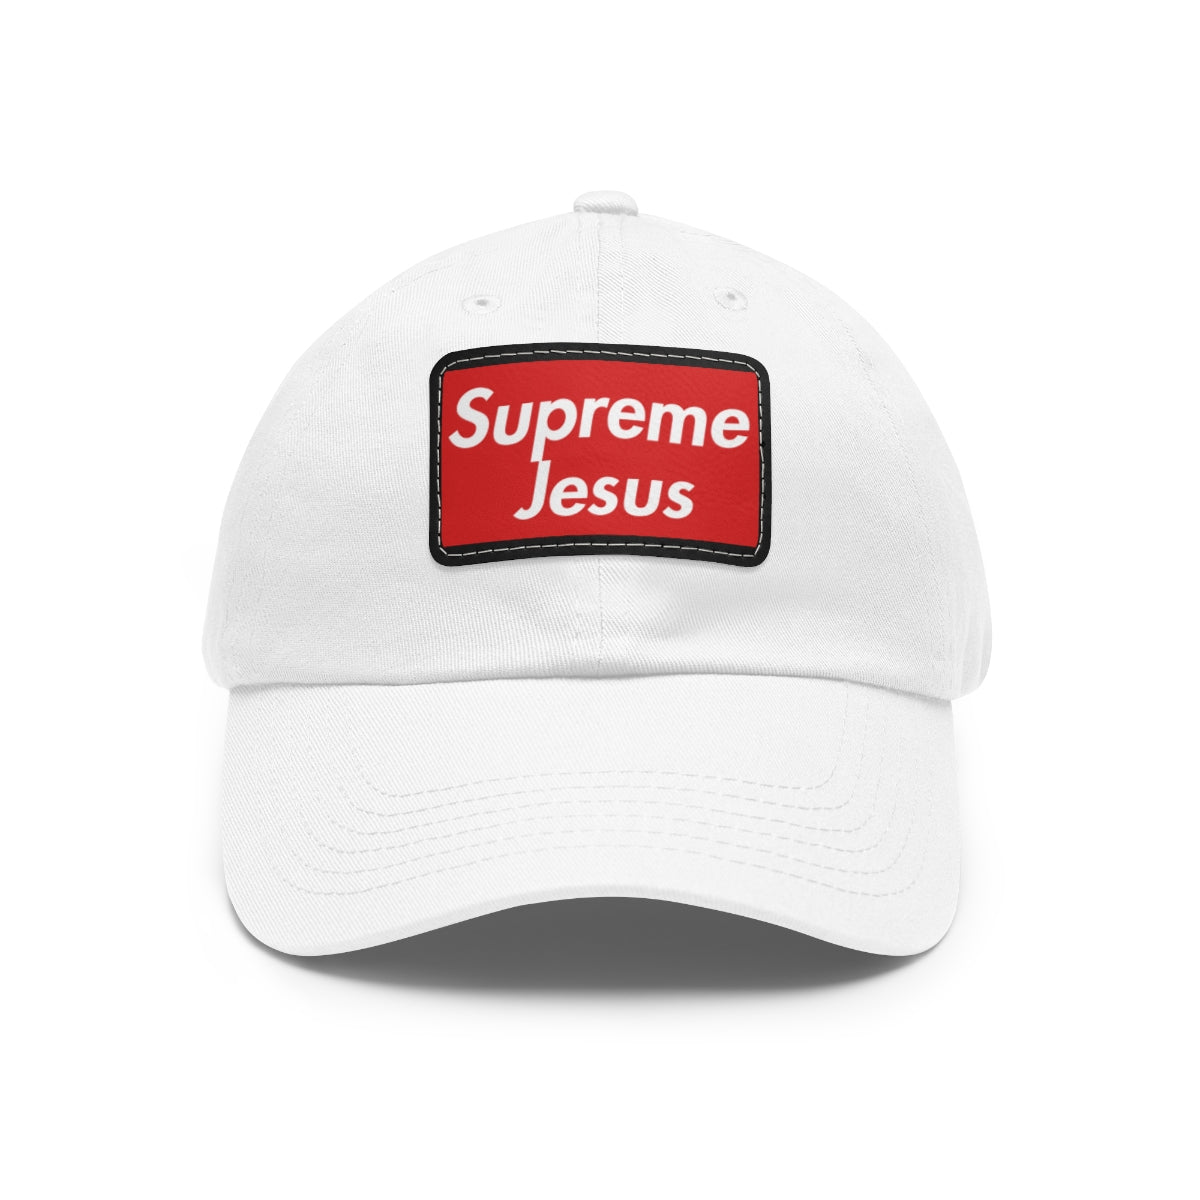 Supreme Jesus unisex hat